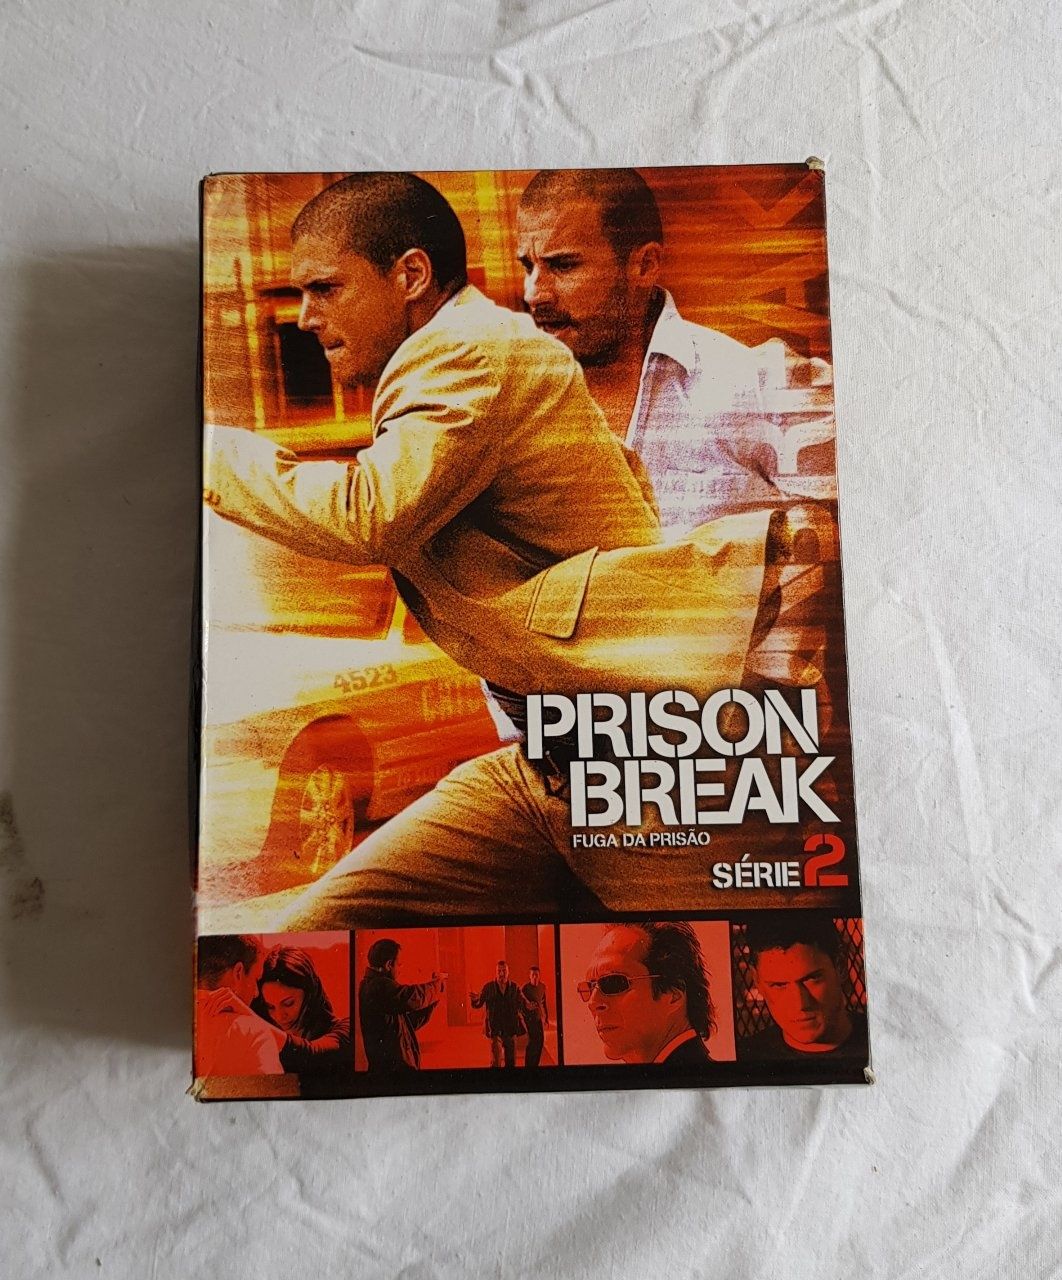 Serie Prison Break DVDS